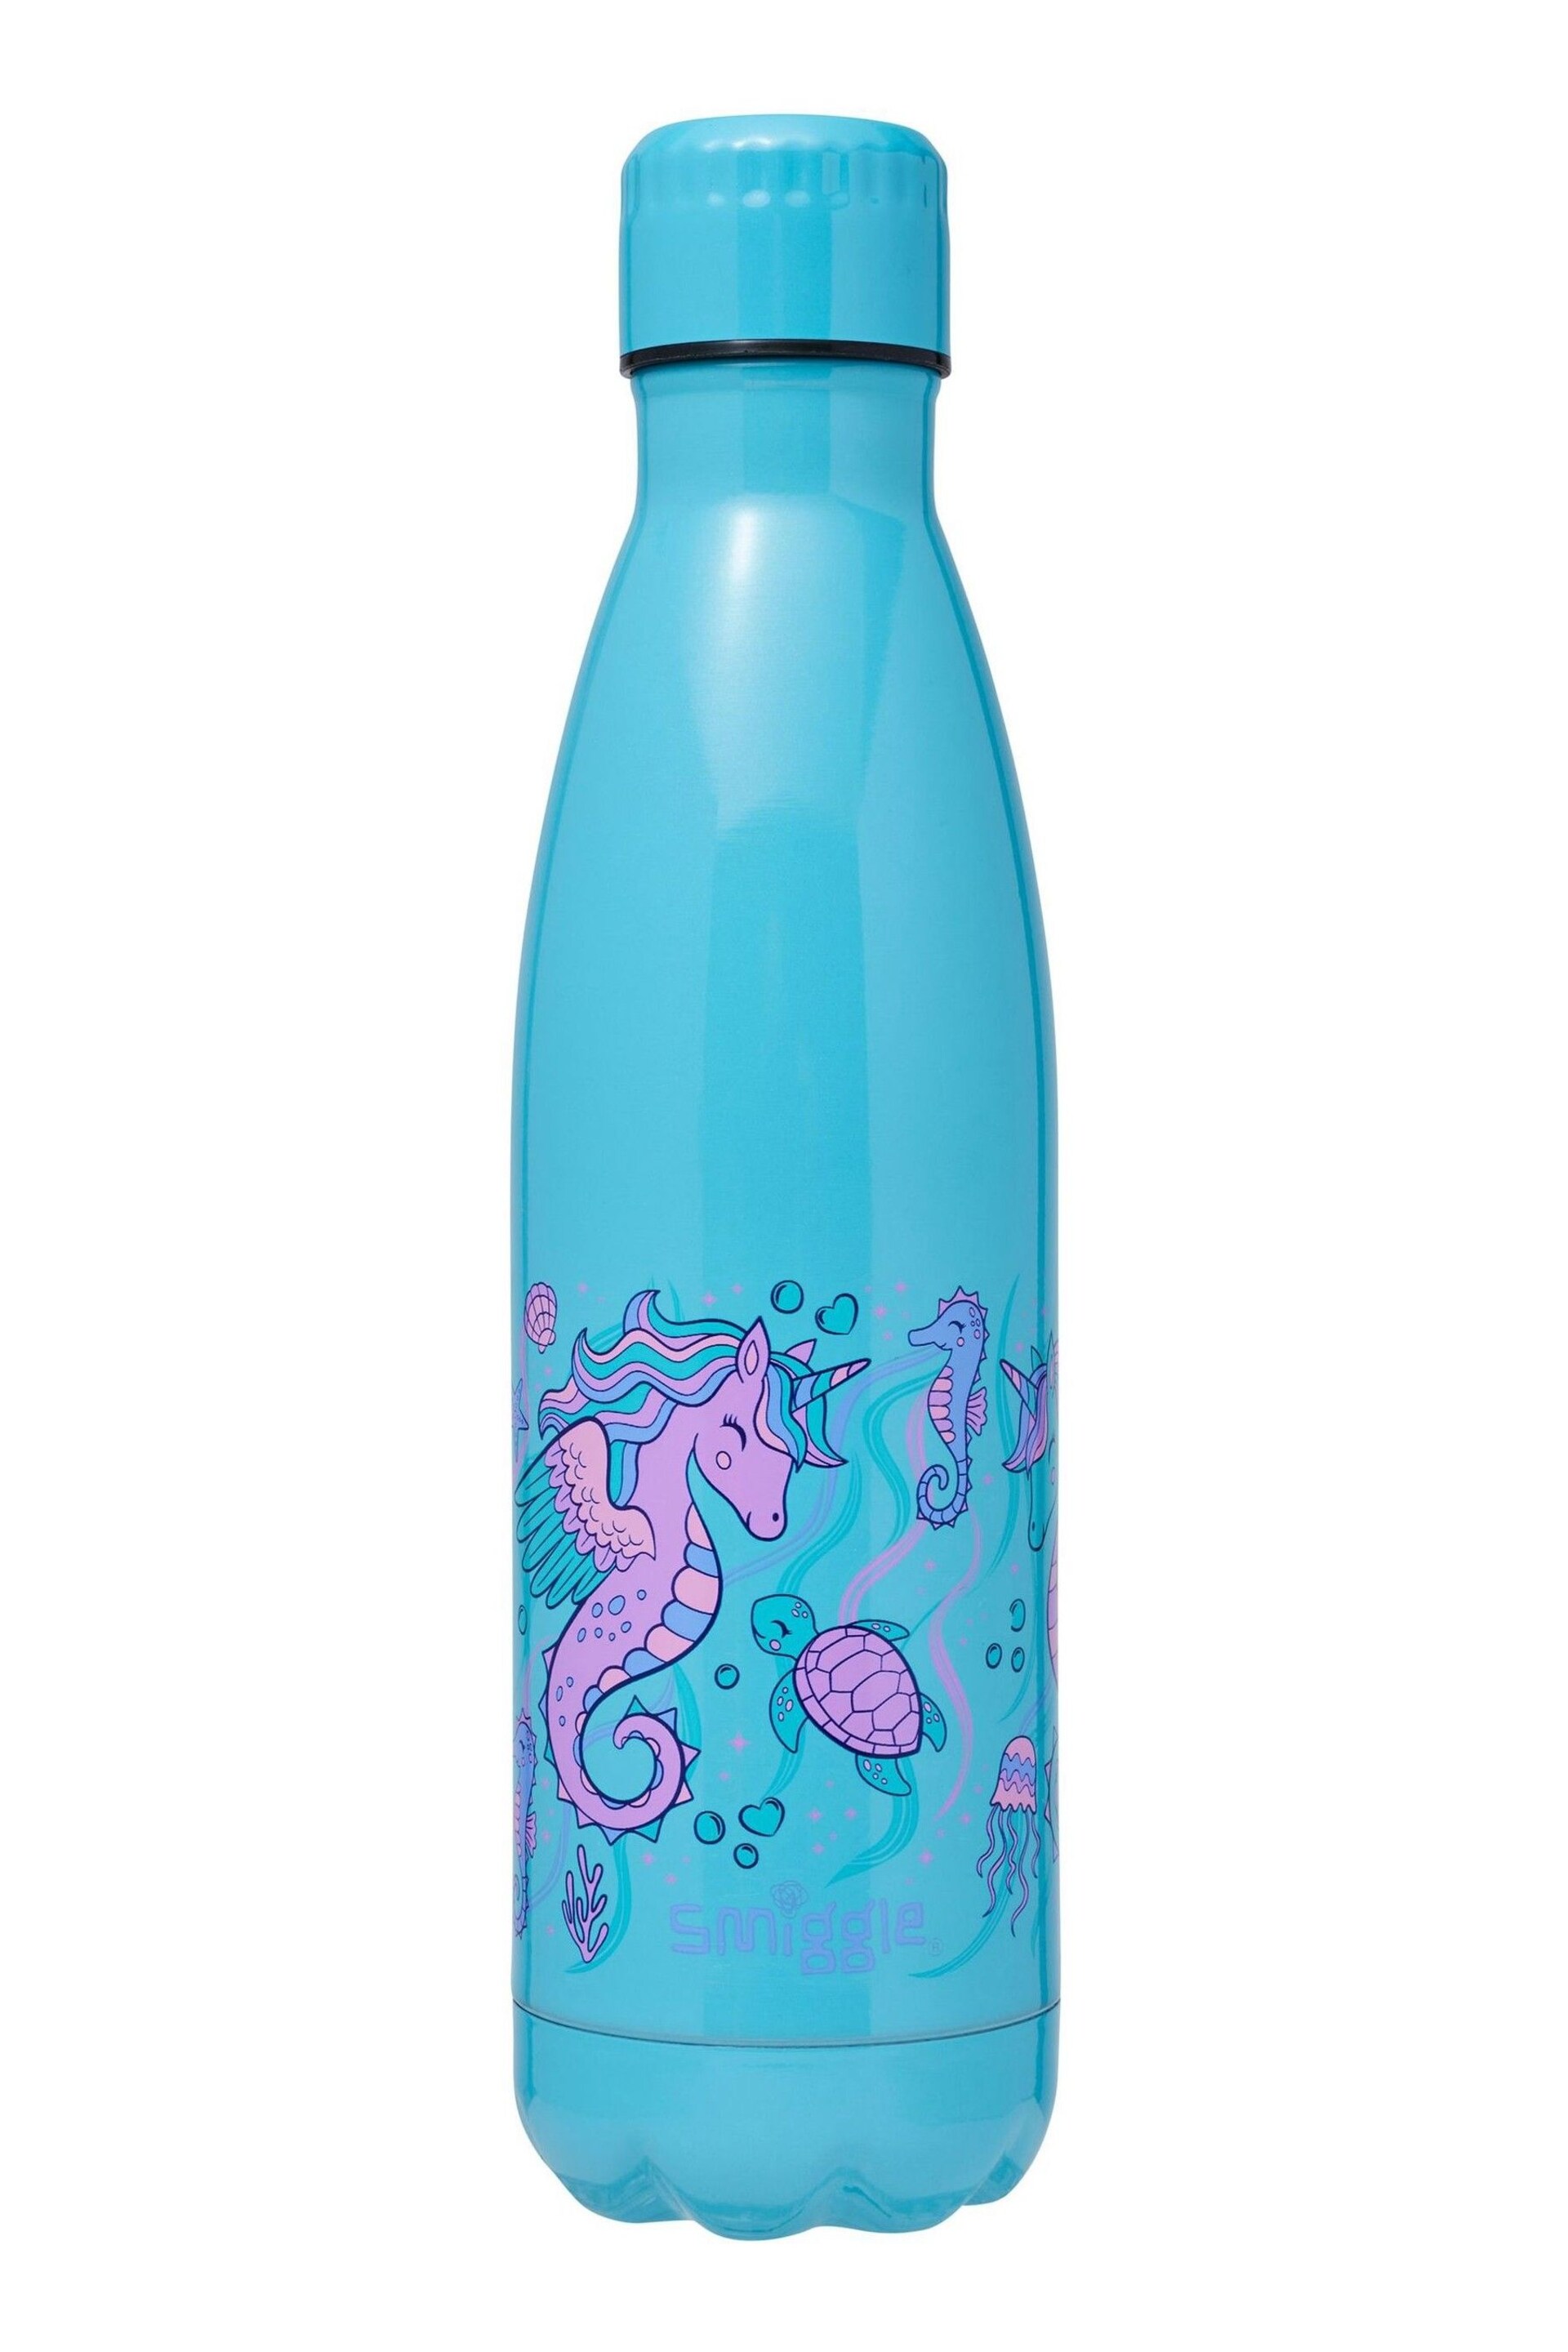 Smiggle Blue/Pink Epic Adventures Wonder Insulated Steel Drink Bottle 500Ml - Image 1 of 1